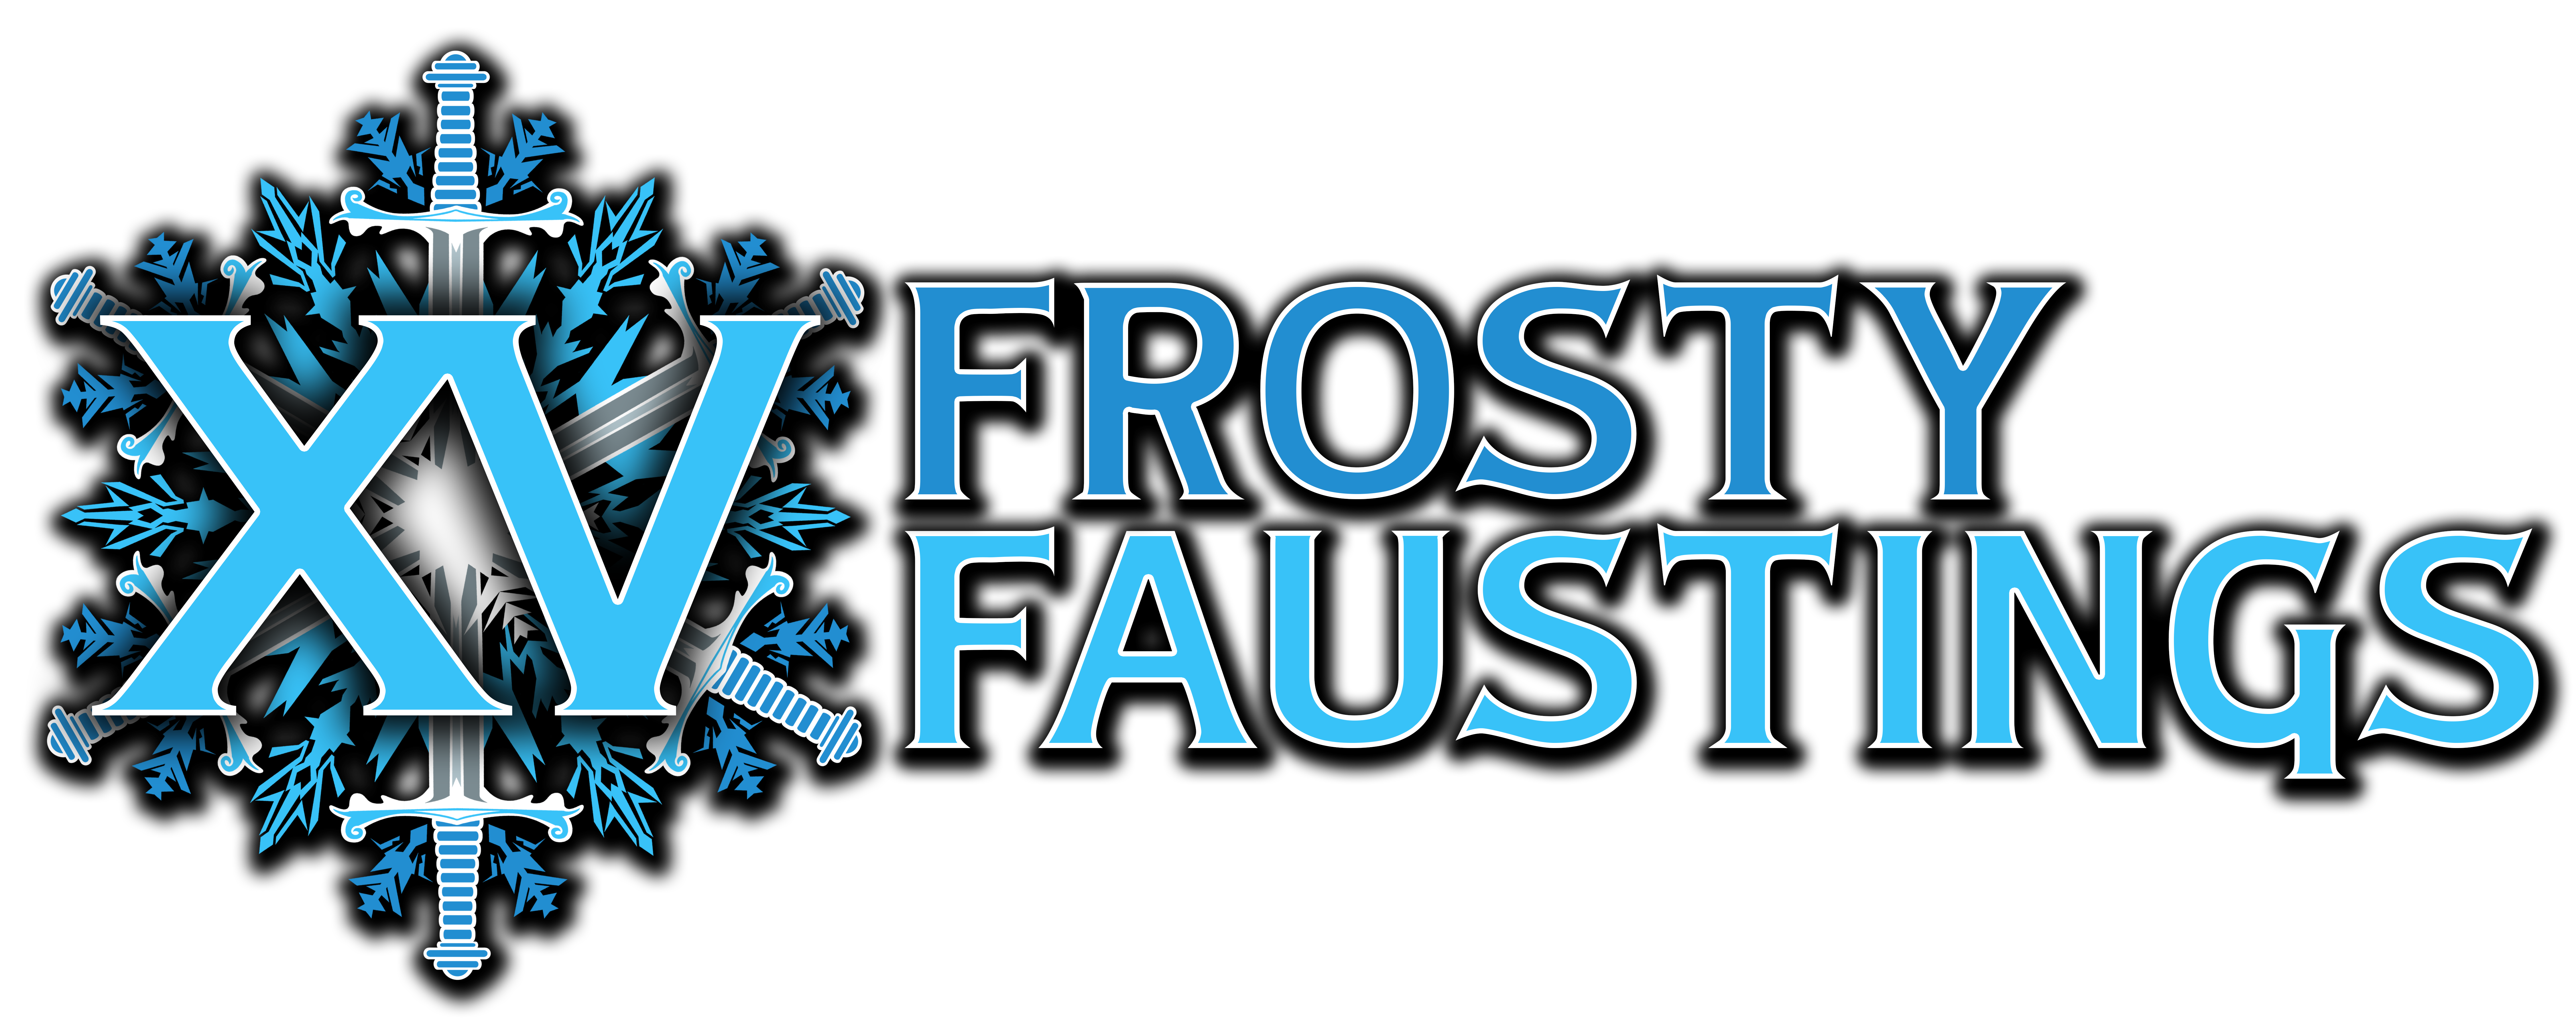 Frosty Faustings